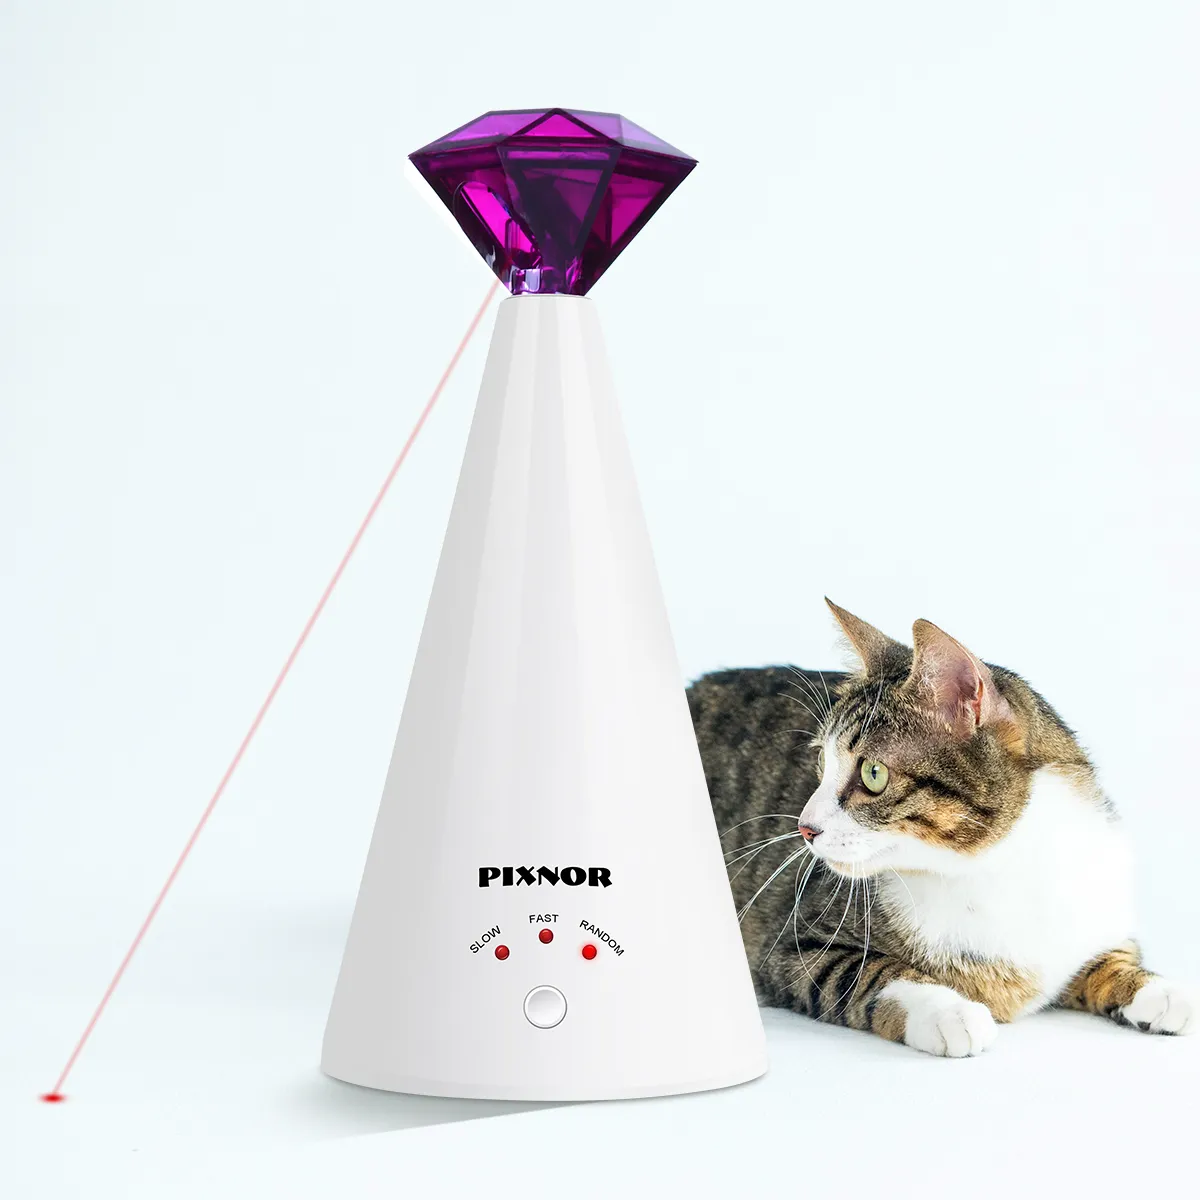 Pixnor Smart Laser Teasing Device Электрическое игрушечное домашнее интерактивное кошка регулируемые 3 скорости PET POMPER Purple 201112953717